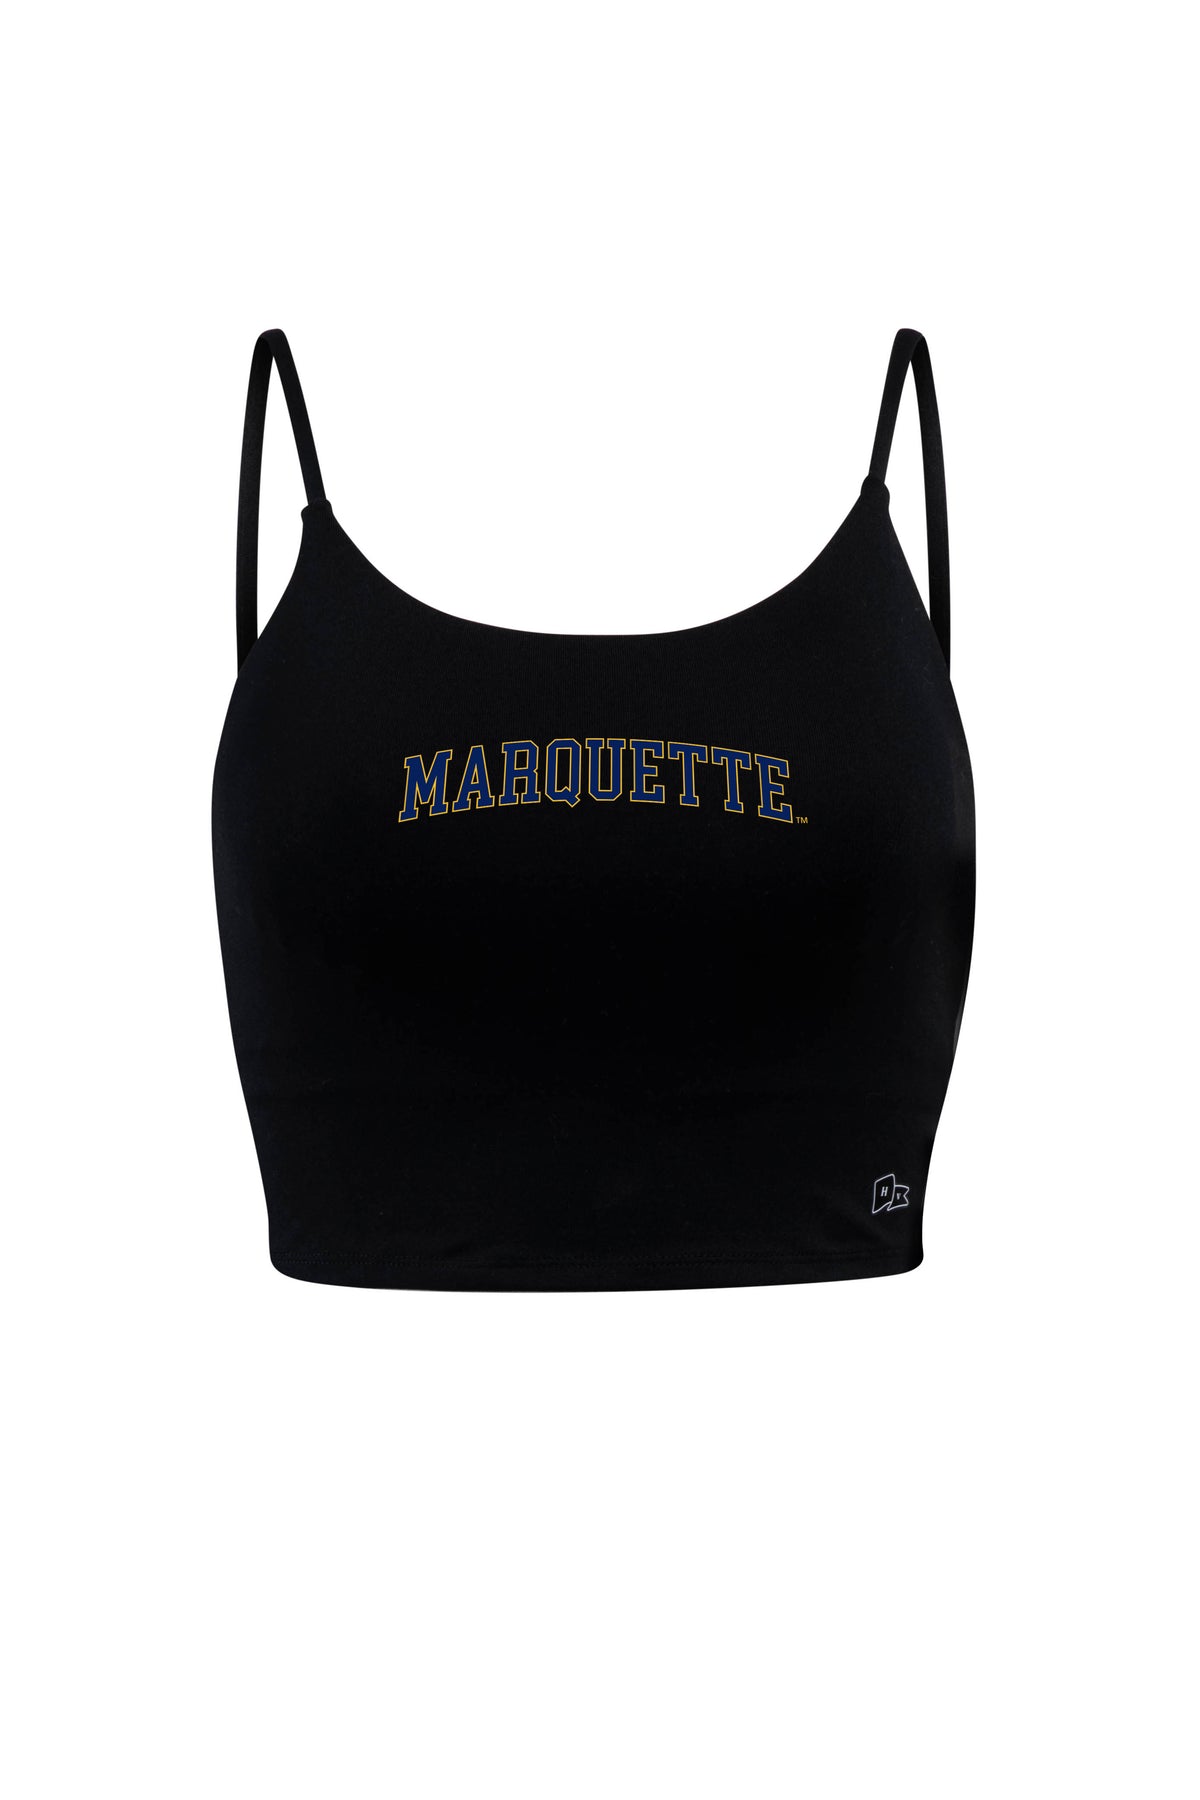 Marquette University Bra Tank Top